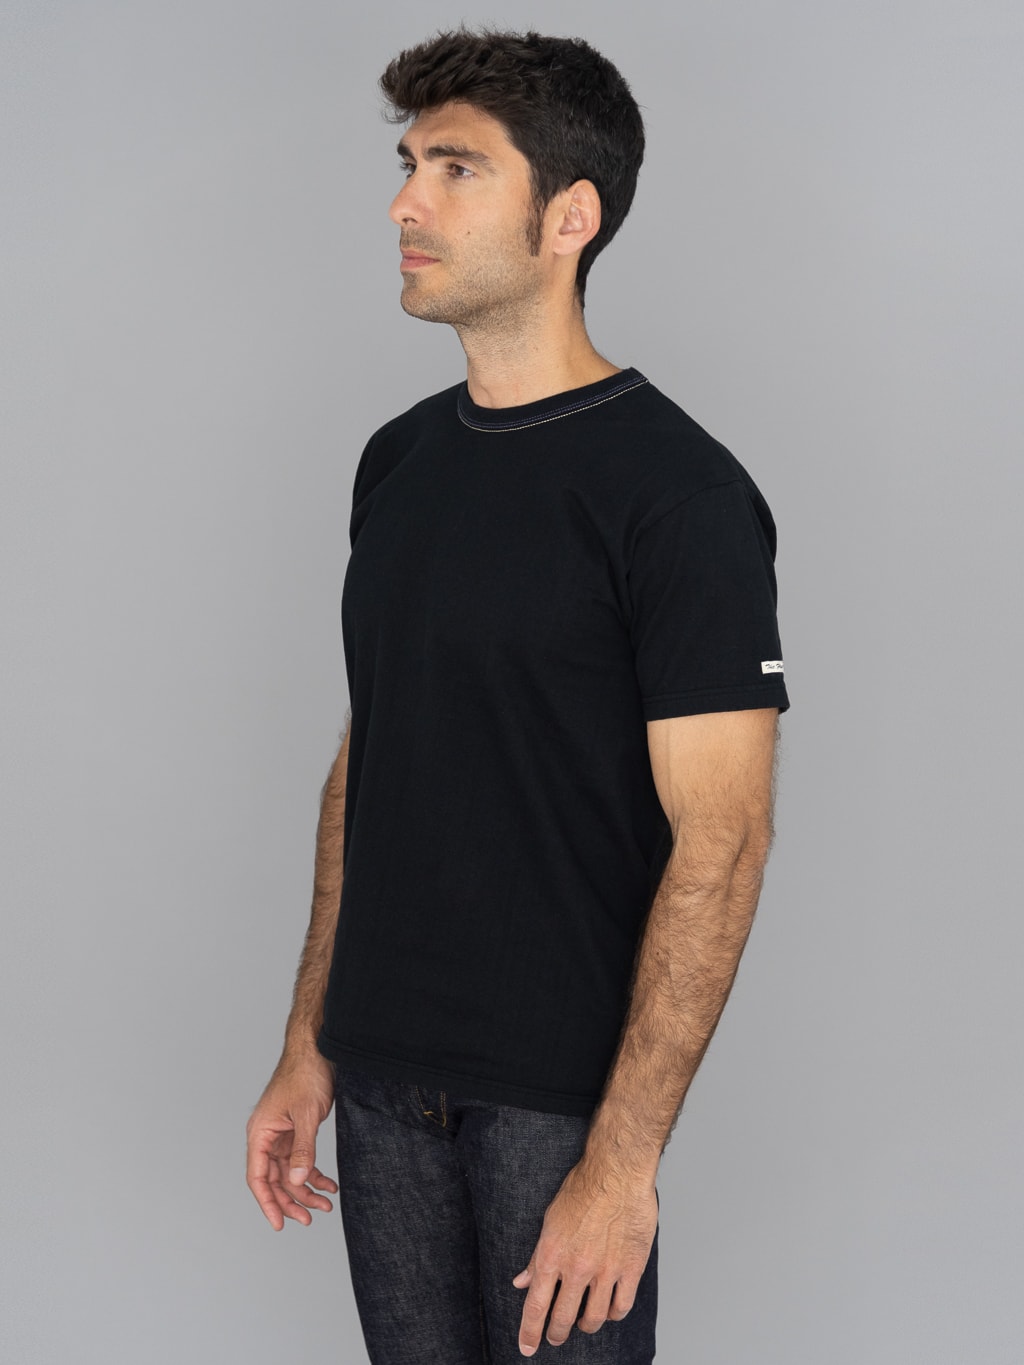 The Flat Head Loopwheeled Heavyweight Plain T-Shirt Black